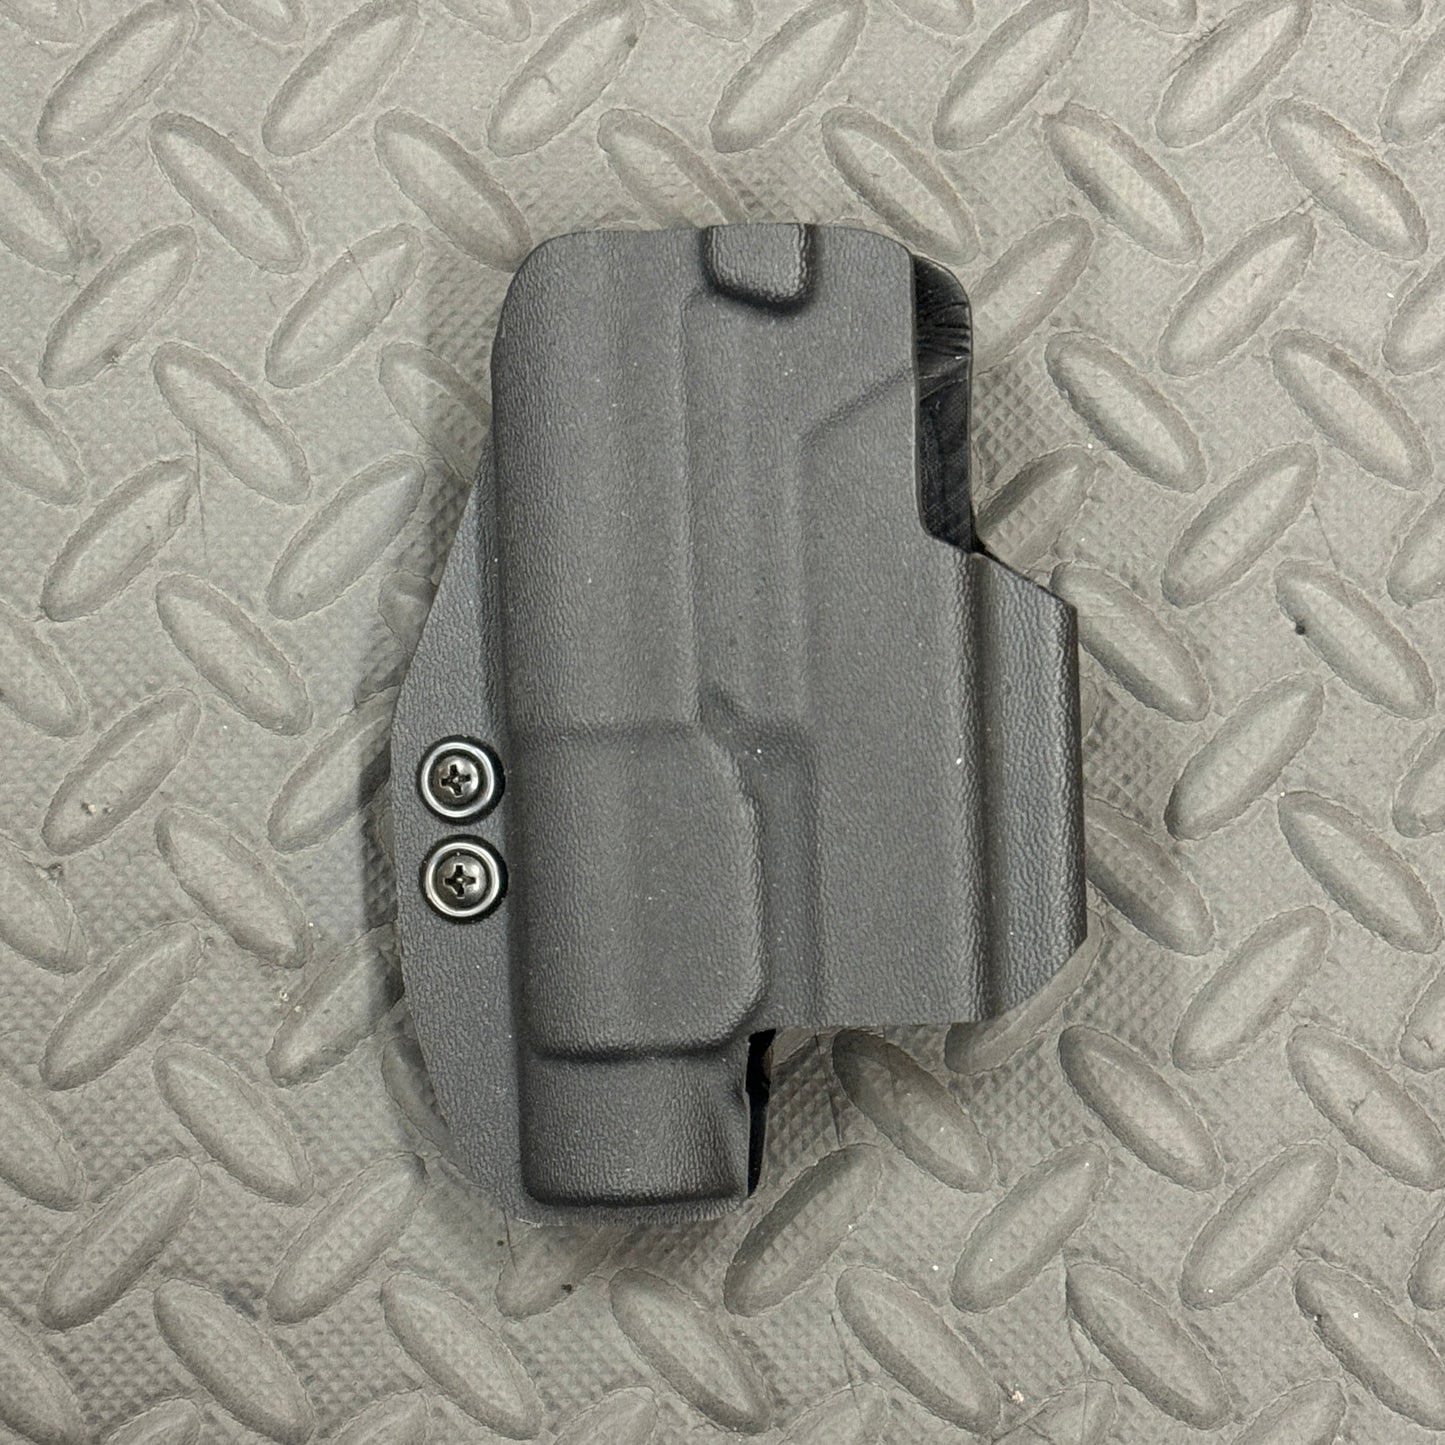 OWB Holster for Glock 19/23 w/TLR-1